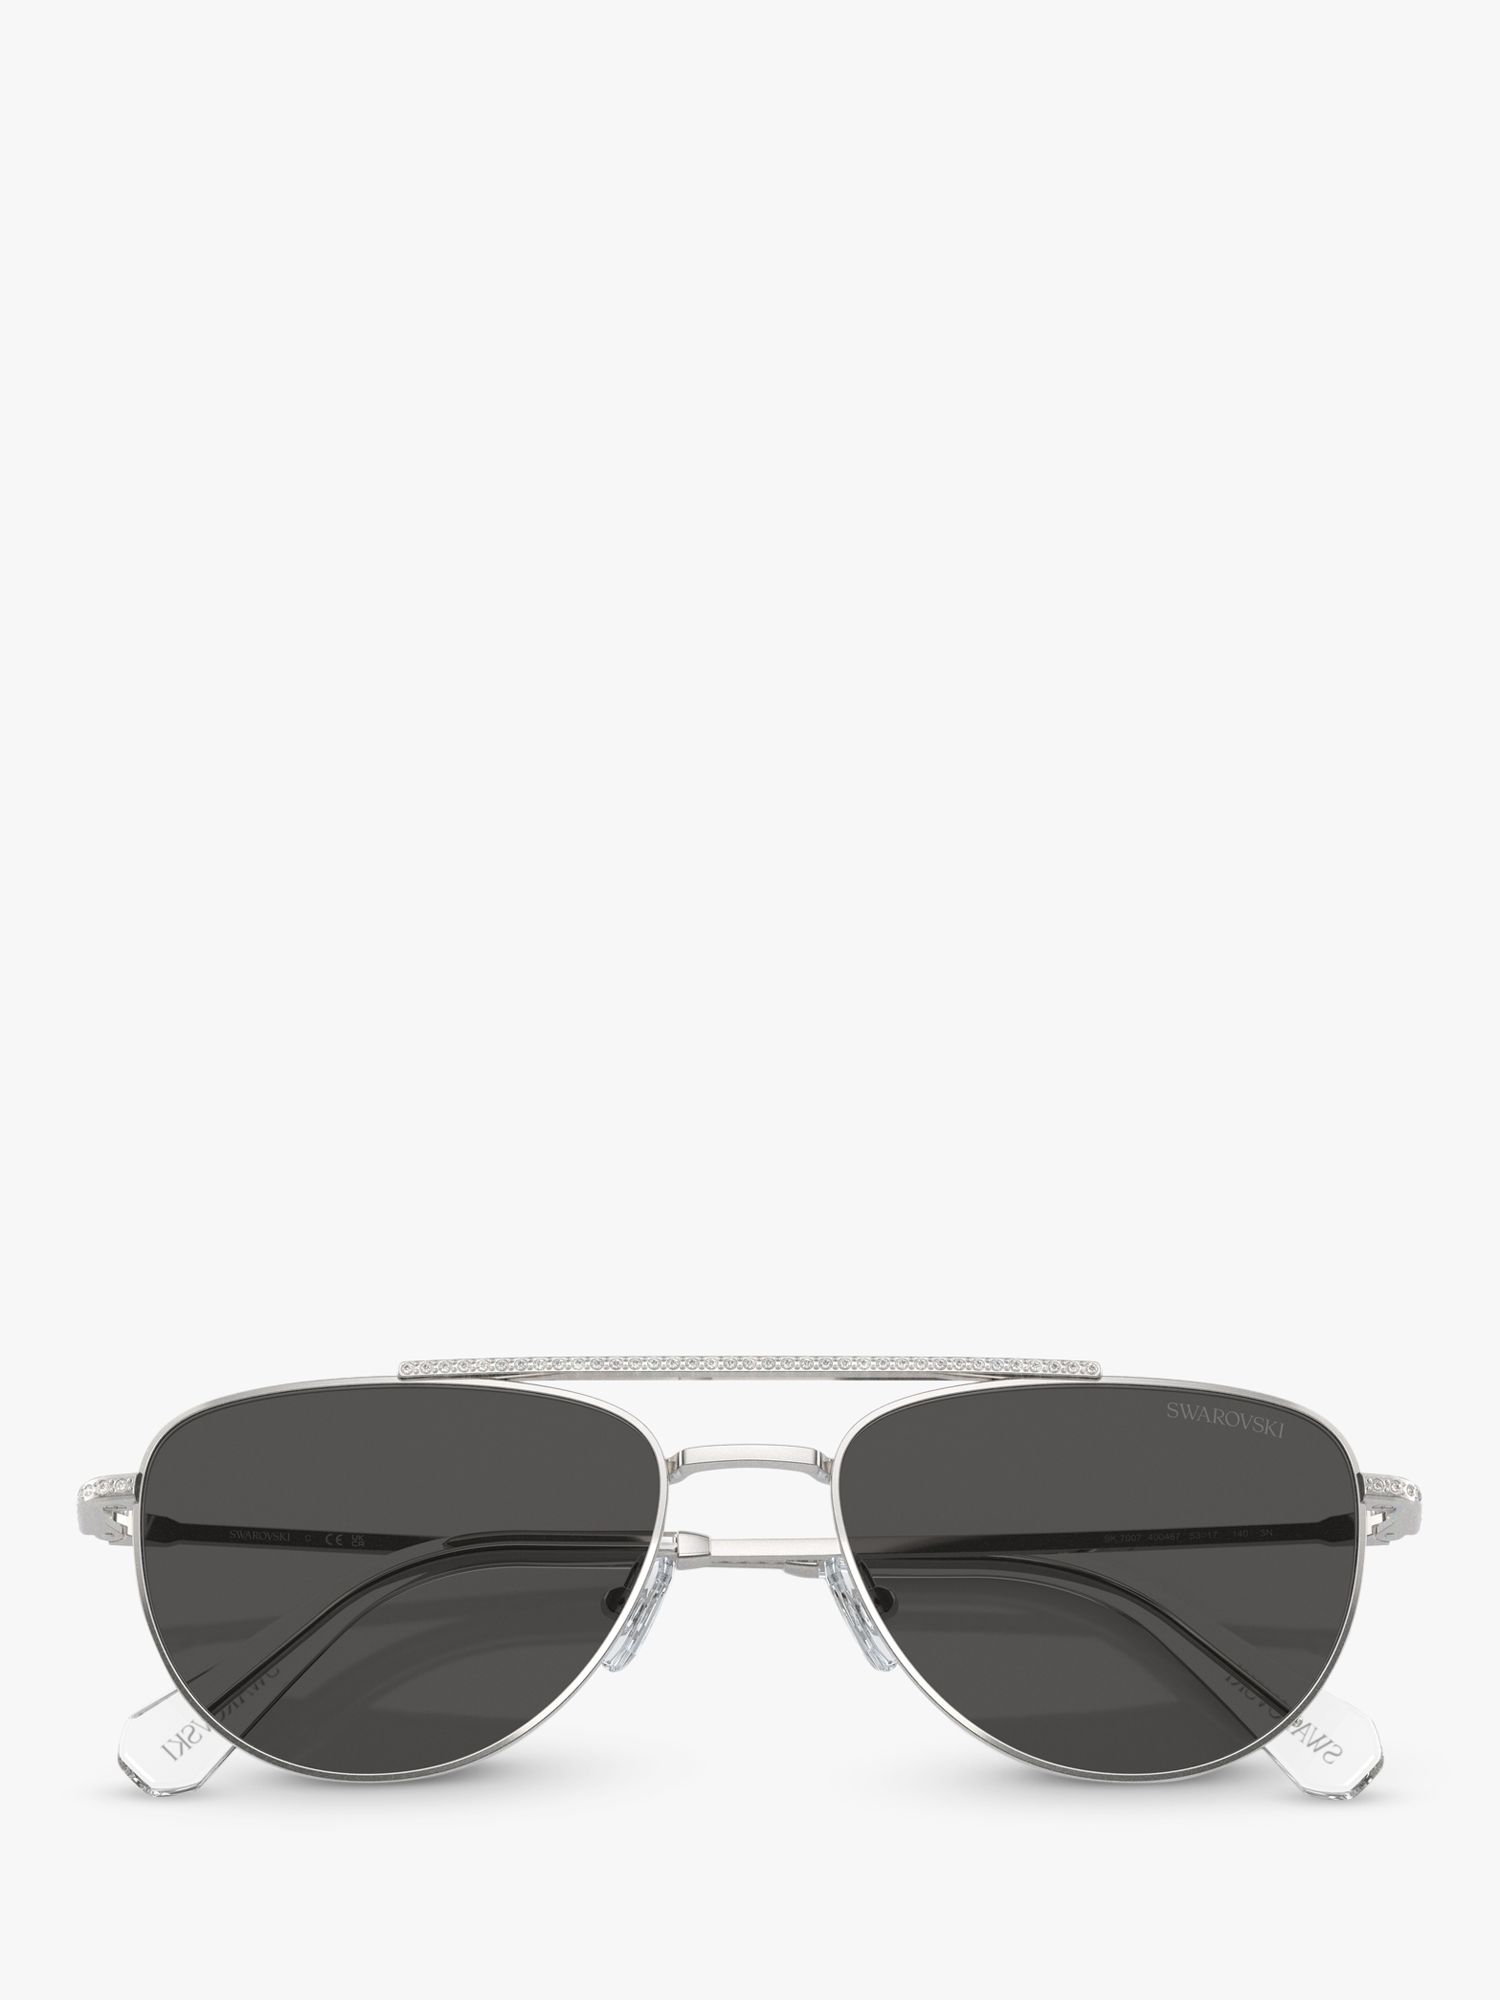 Buy Swarovski SK7007 Women's Irregular Sunglasses, Silver/Grey Online at johnlewis.com